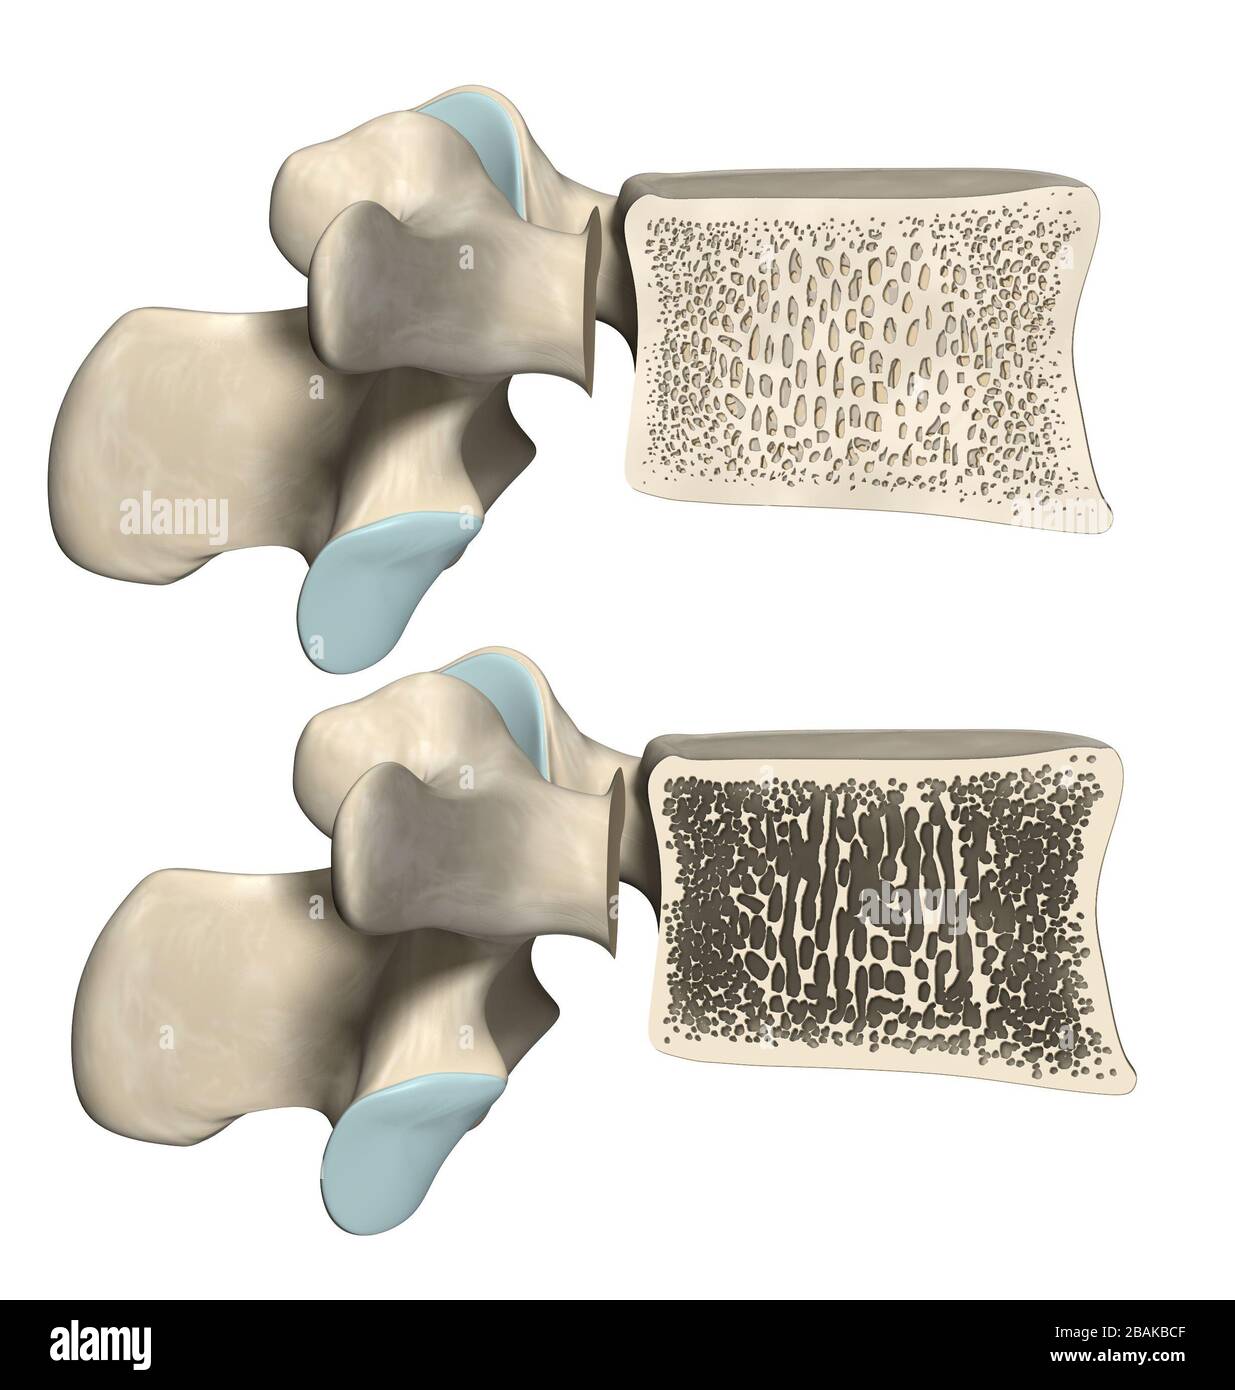 above: healthy vertebral body and normal bone matrix  down: vertebral body with osteoporosis, 3D illustration Stock Photo